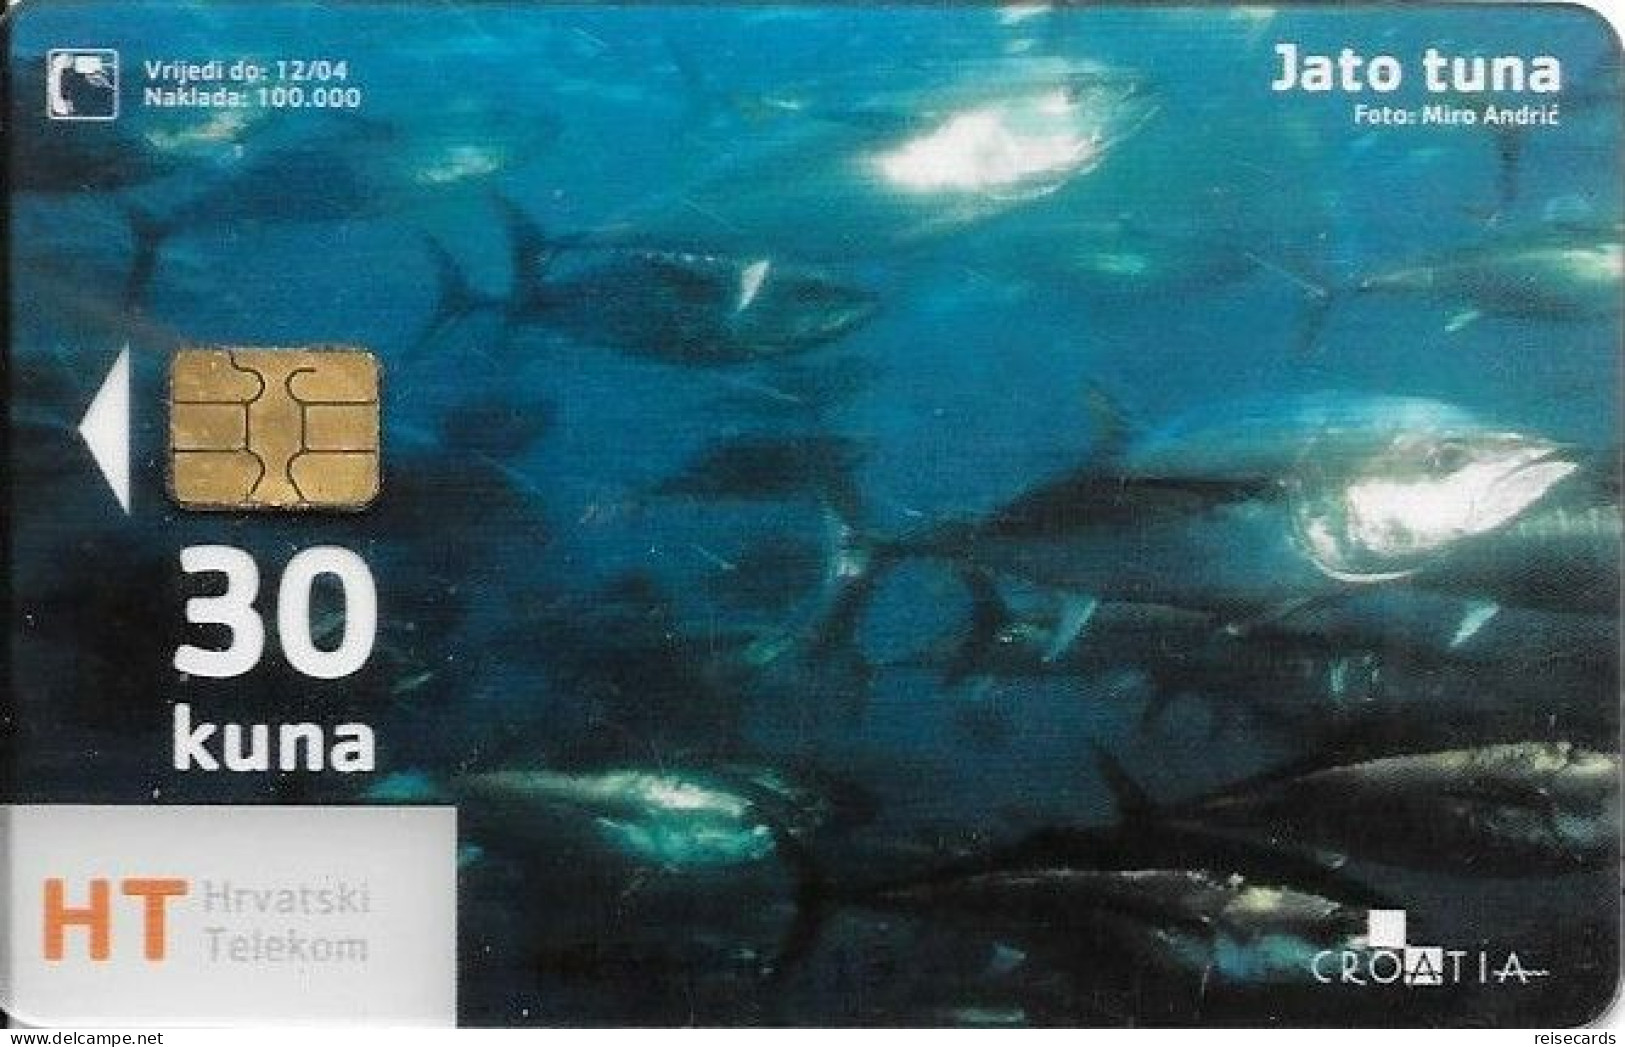 Croatia: Hrvatski Telekom - Underwater World, Jato Tuna. Transparent - Kroatien